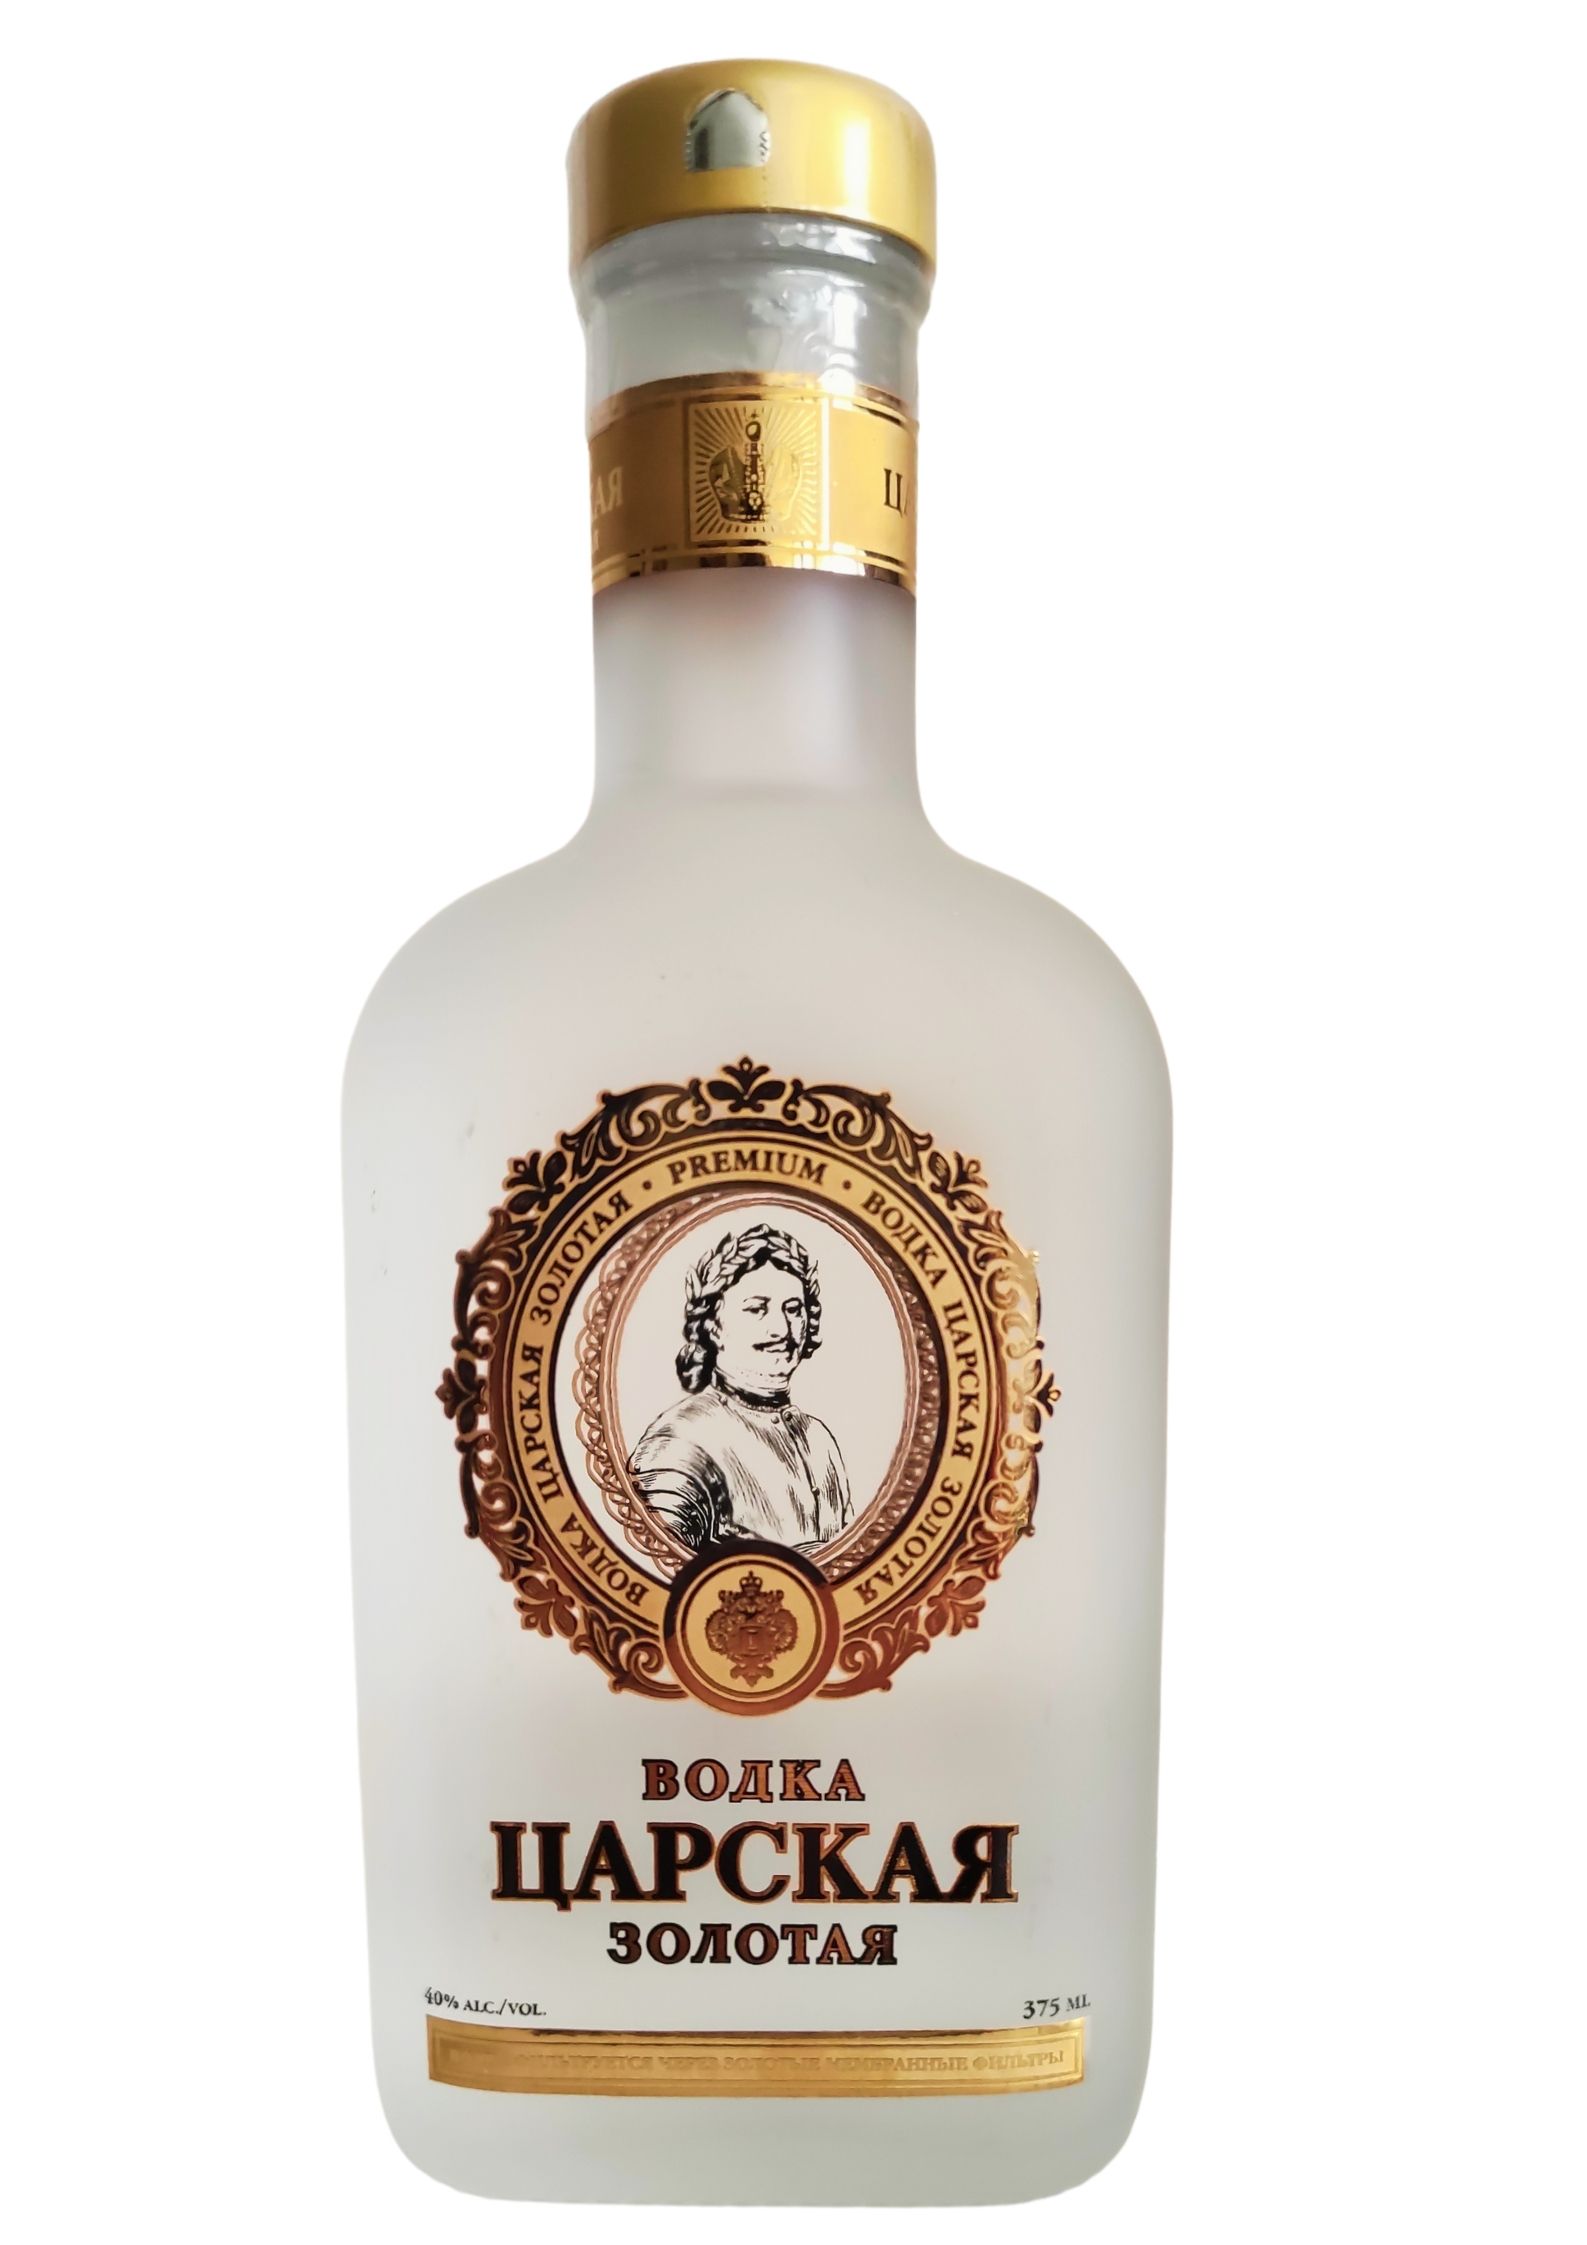 Tsarskaya Gold Flasque Vodka Russe